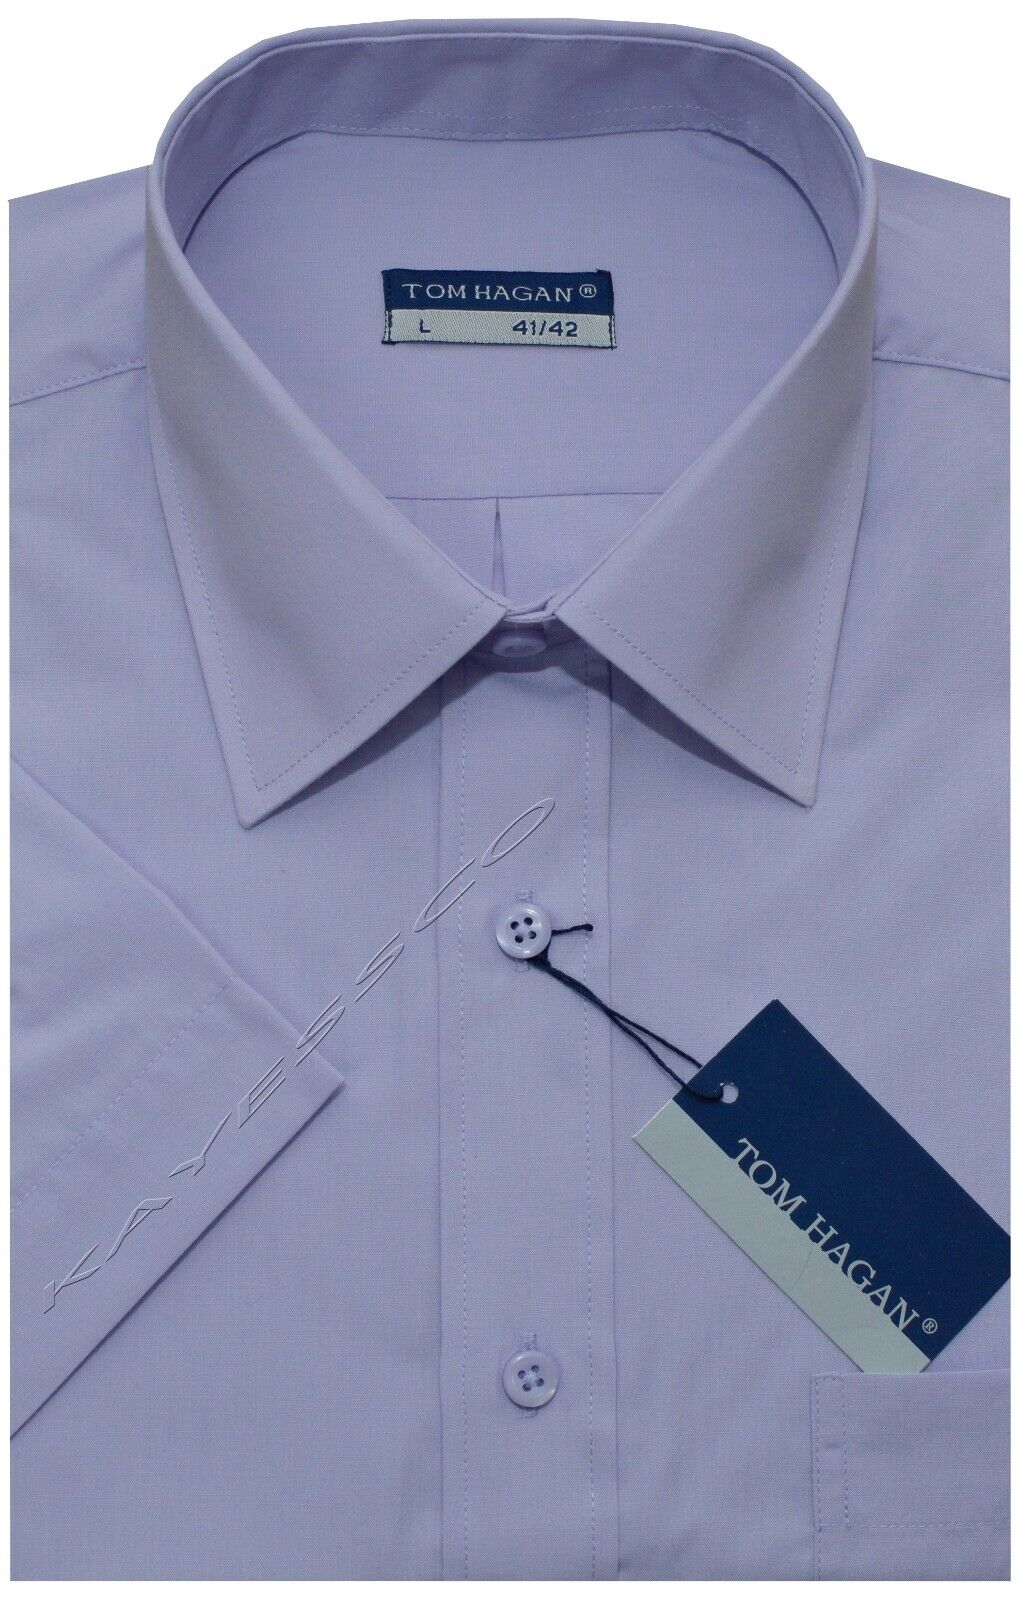 New Mens Short Sleeve Poly Cotton Plain Shirt M - XXL By Tom Hagan | eBay